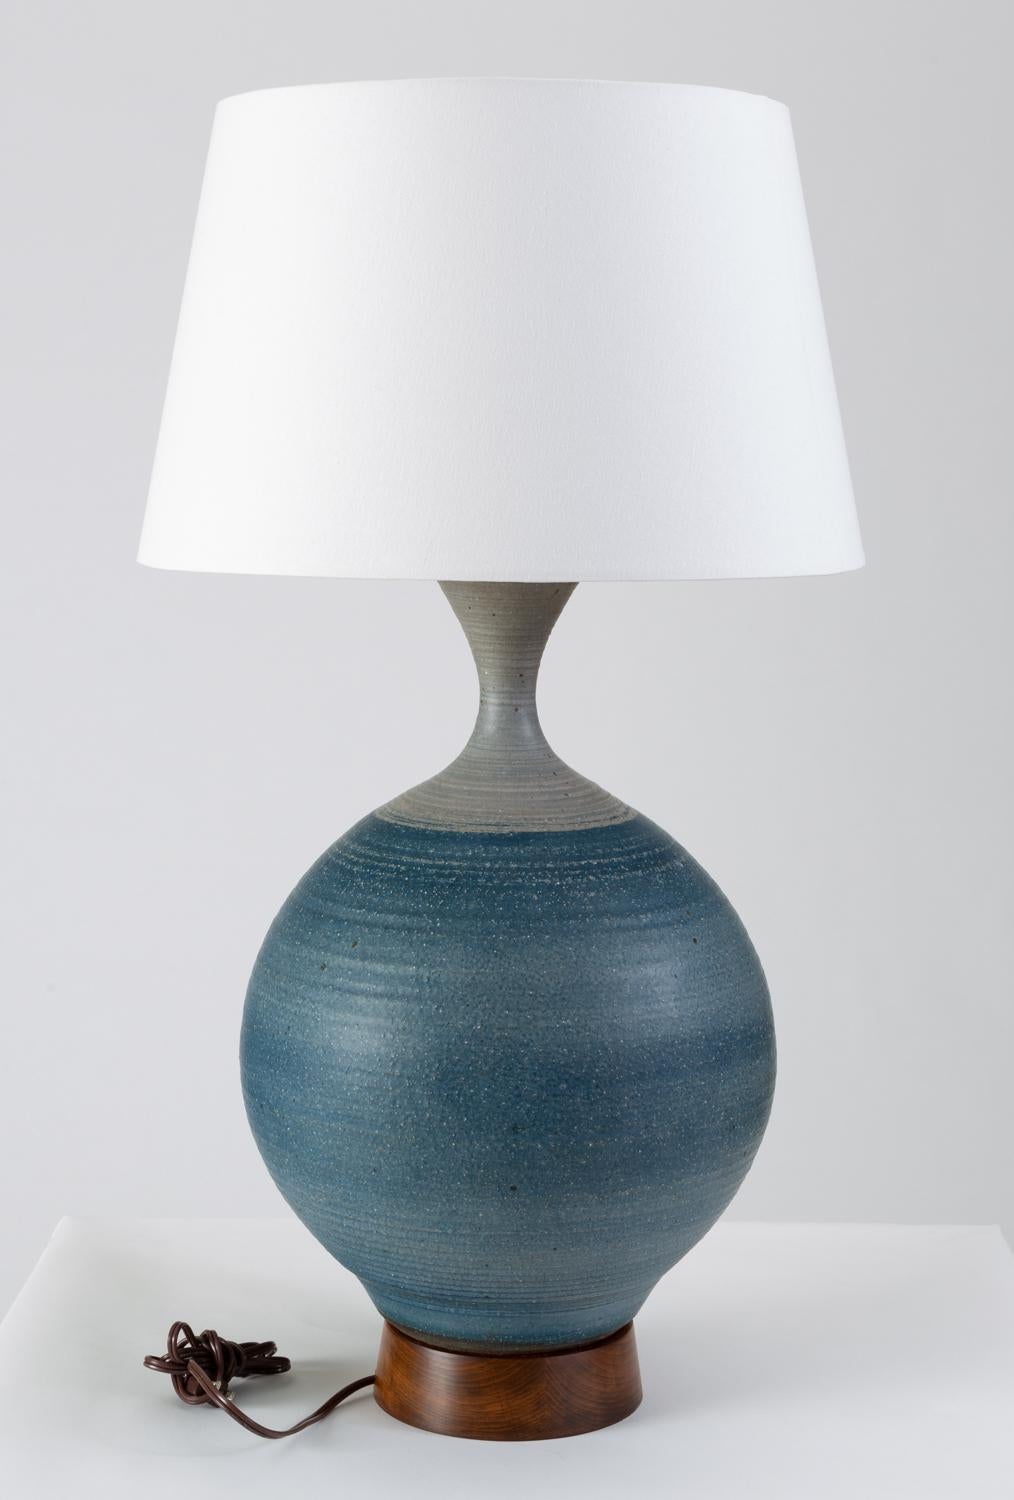 Glazed Large Stoneware Lamp by Bob Kinzie for Affiliated Craftsmen